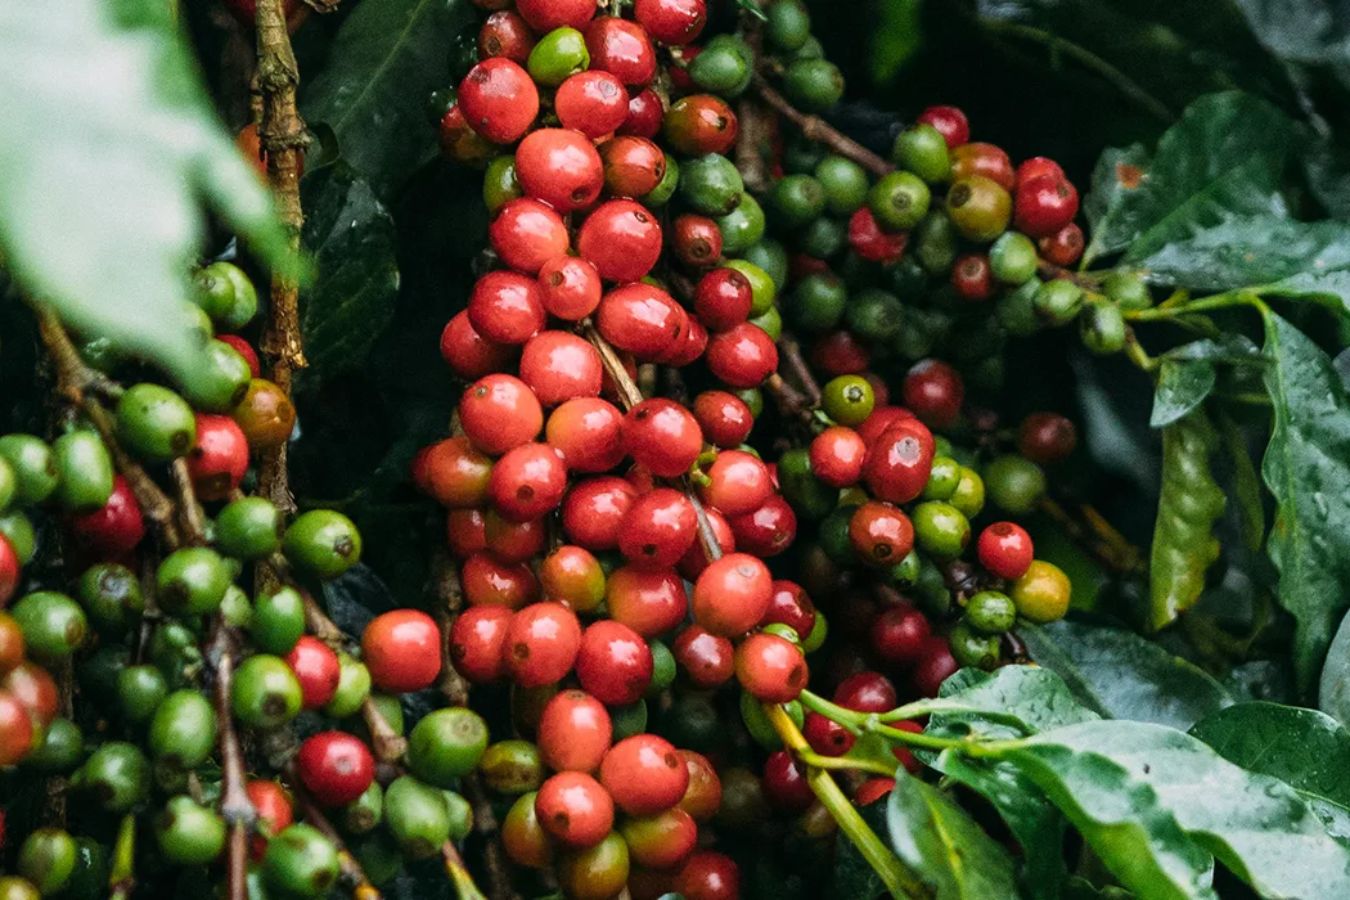 Batian Coffee – The Jewel Of Kenya